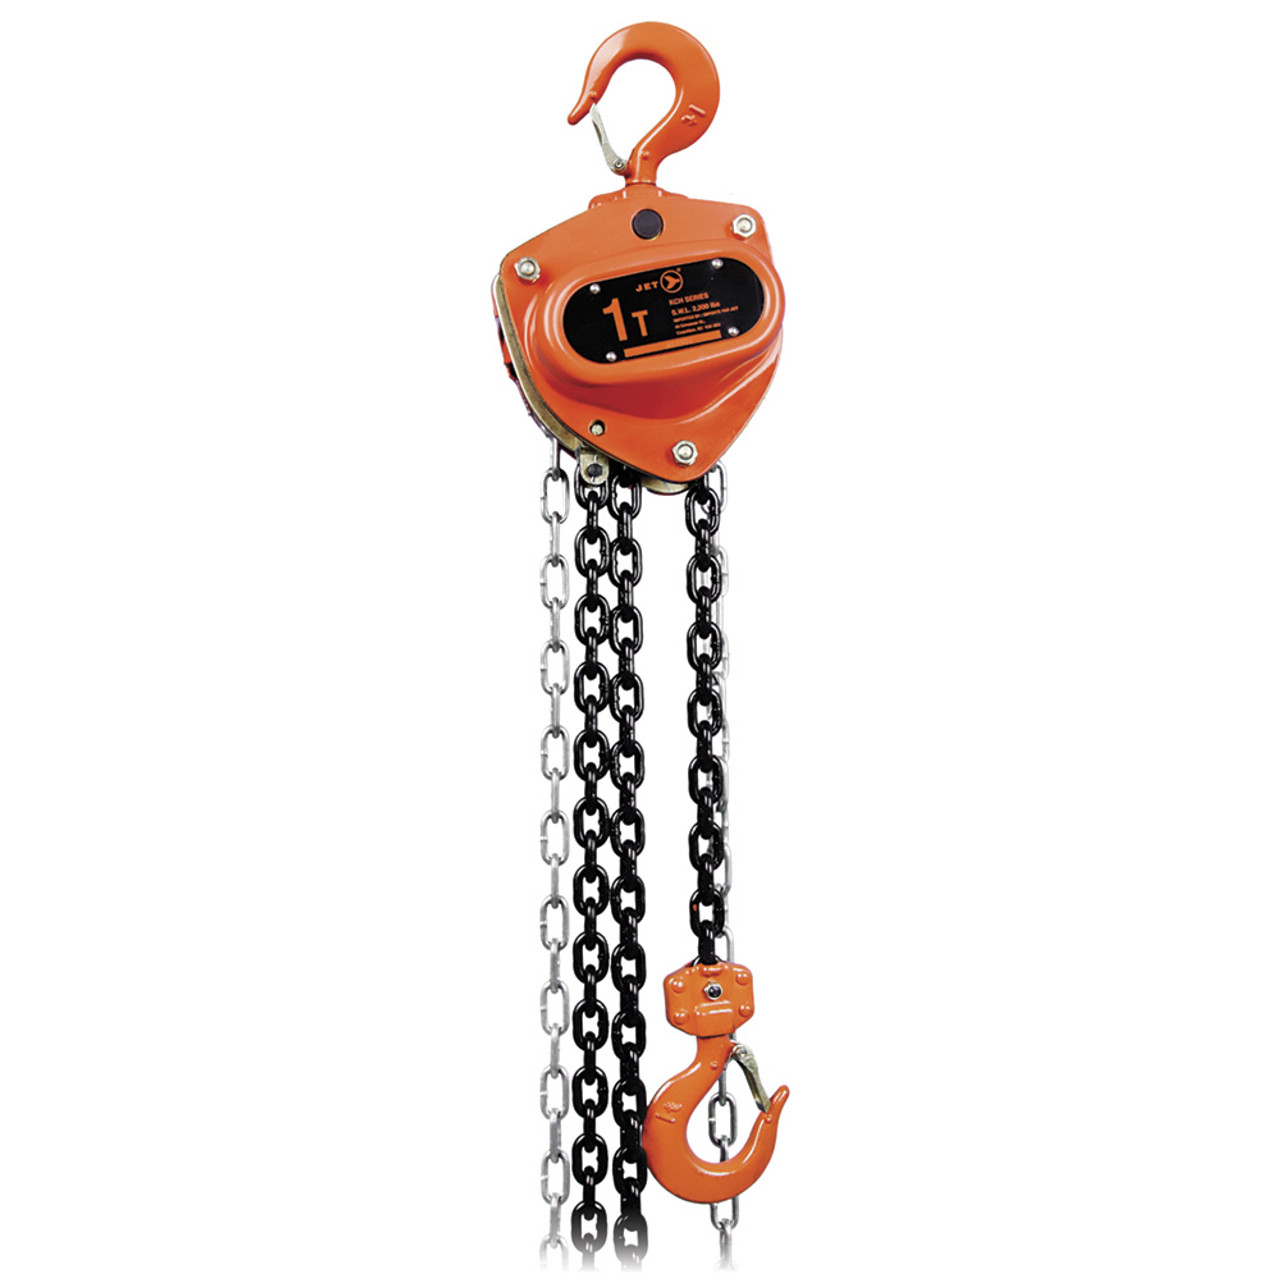 1T @ 20' Lift KCH Series Chain Hoist  101116